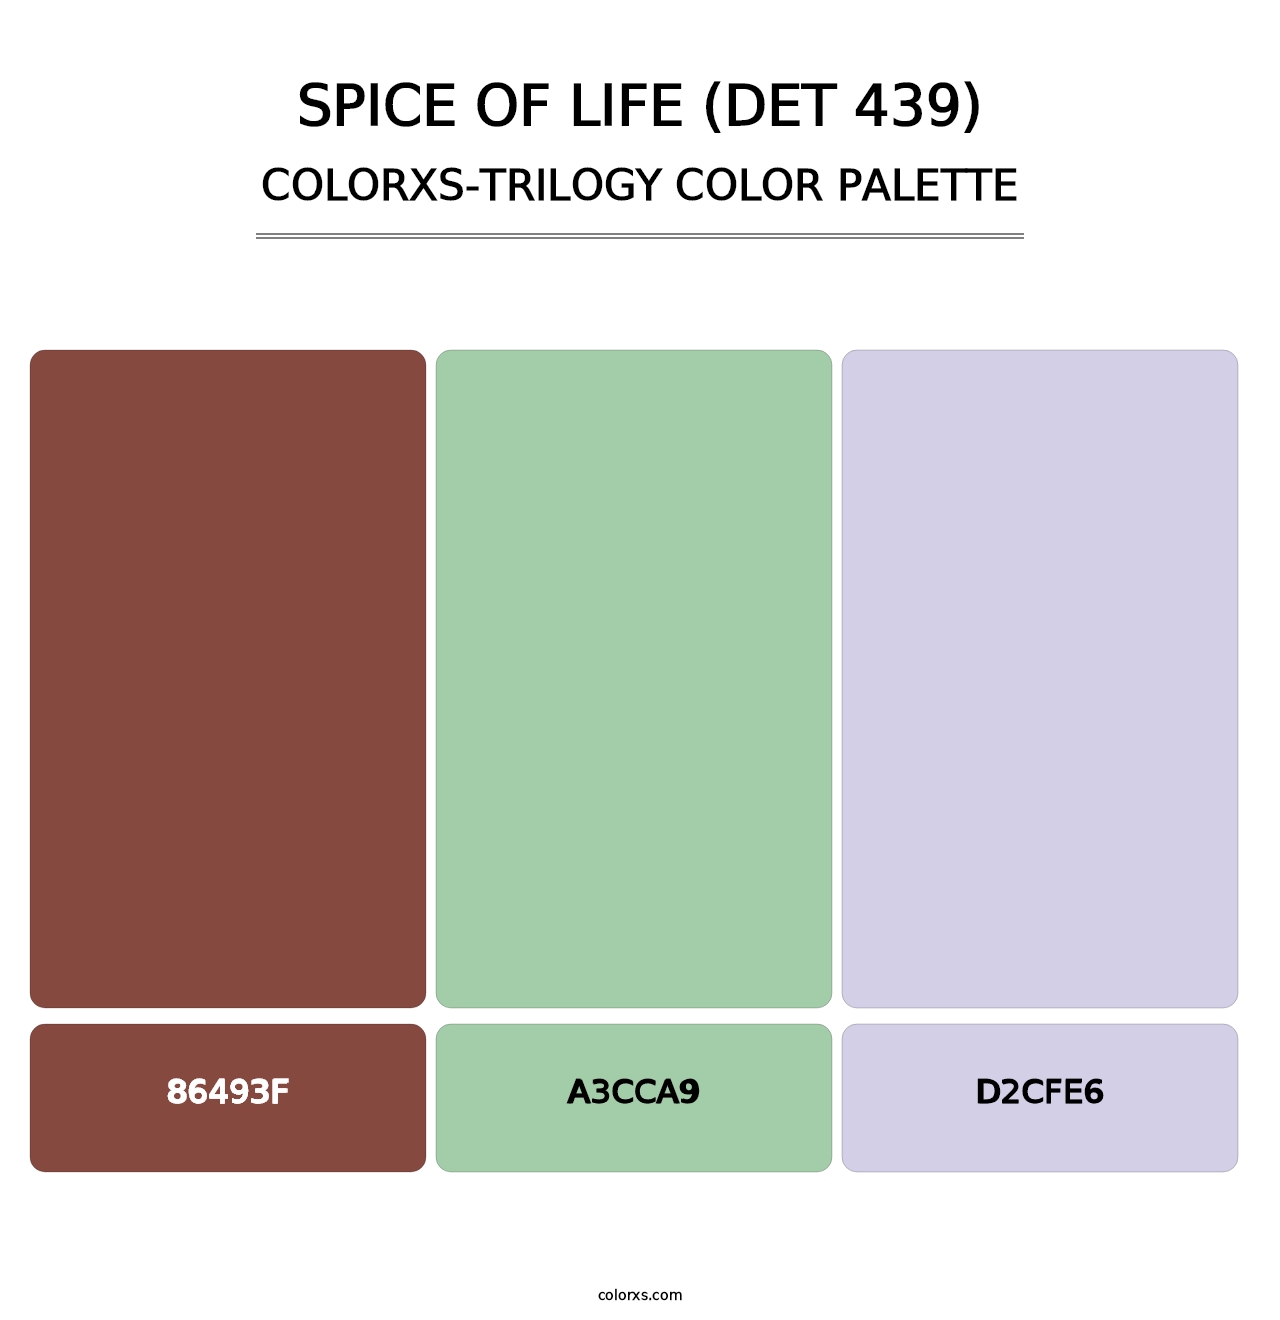 Spice of Life (DET 439) - Colorxs Trilogy Palette